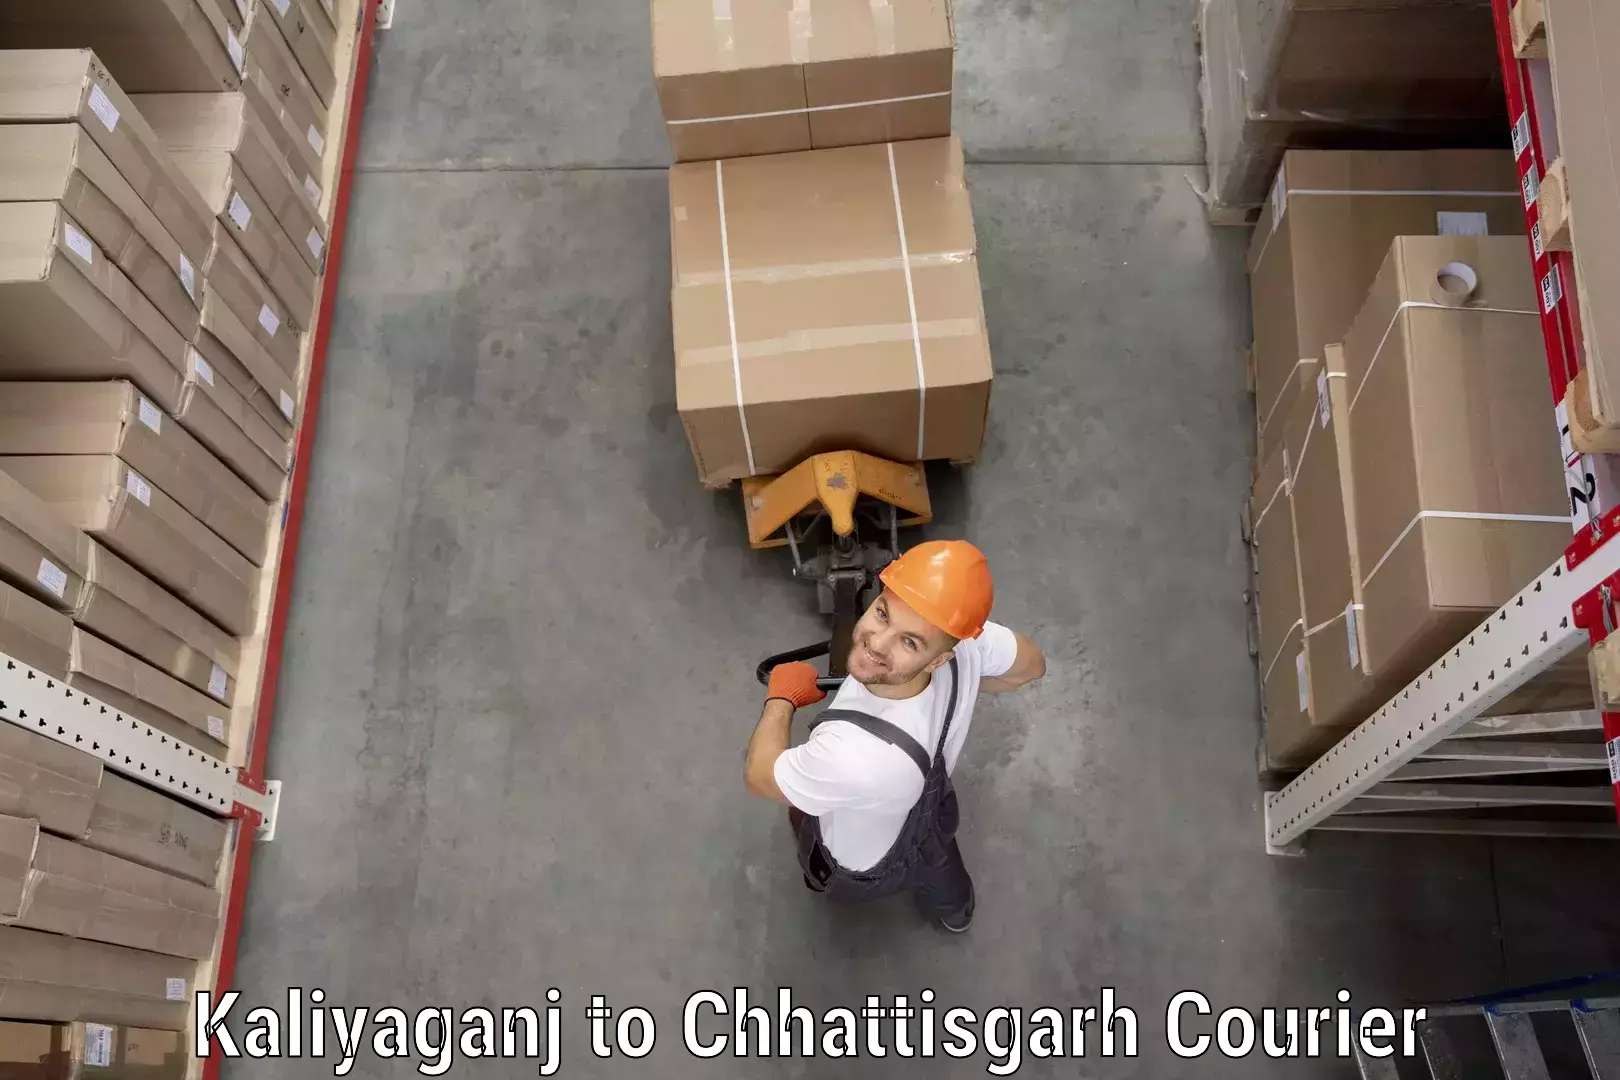 State-of-the-art courier technology Kaliyaganj to Korea Chhattisgarh